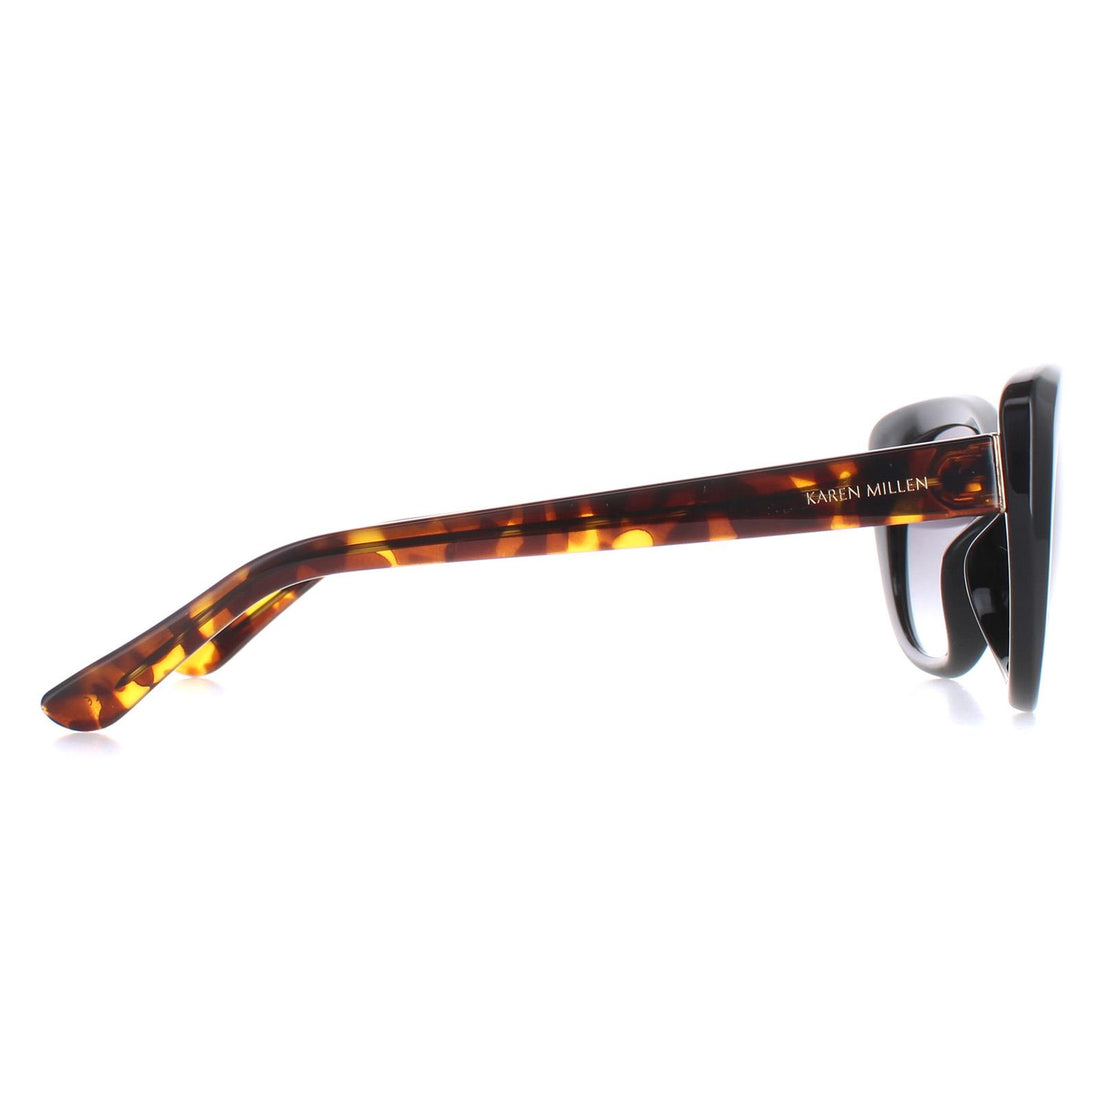 Karen Millen Sunglasses KM5024 001 Black and Tortoiseshell Grey Gradient